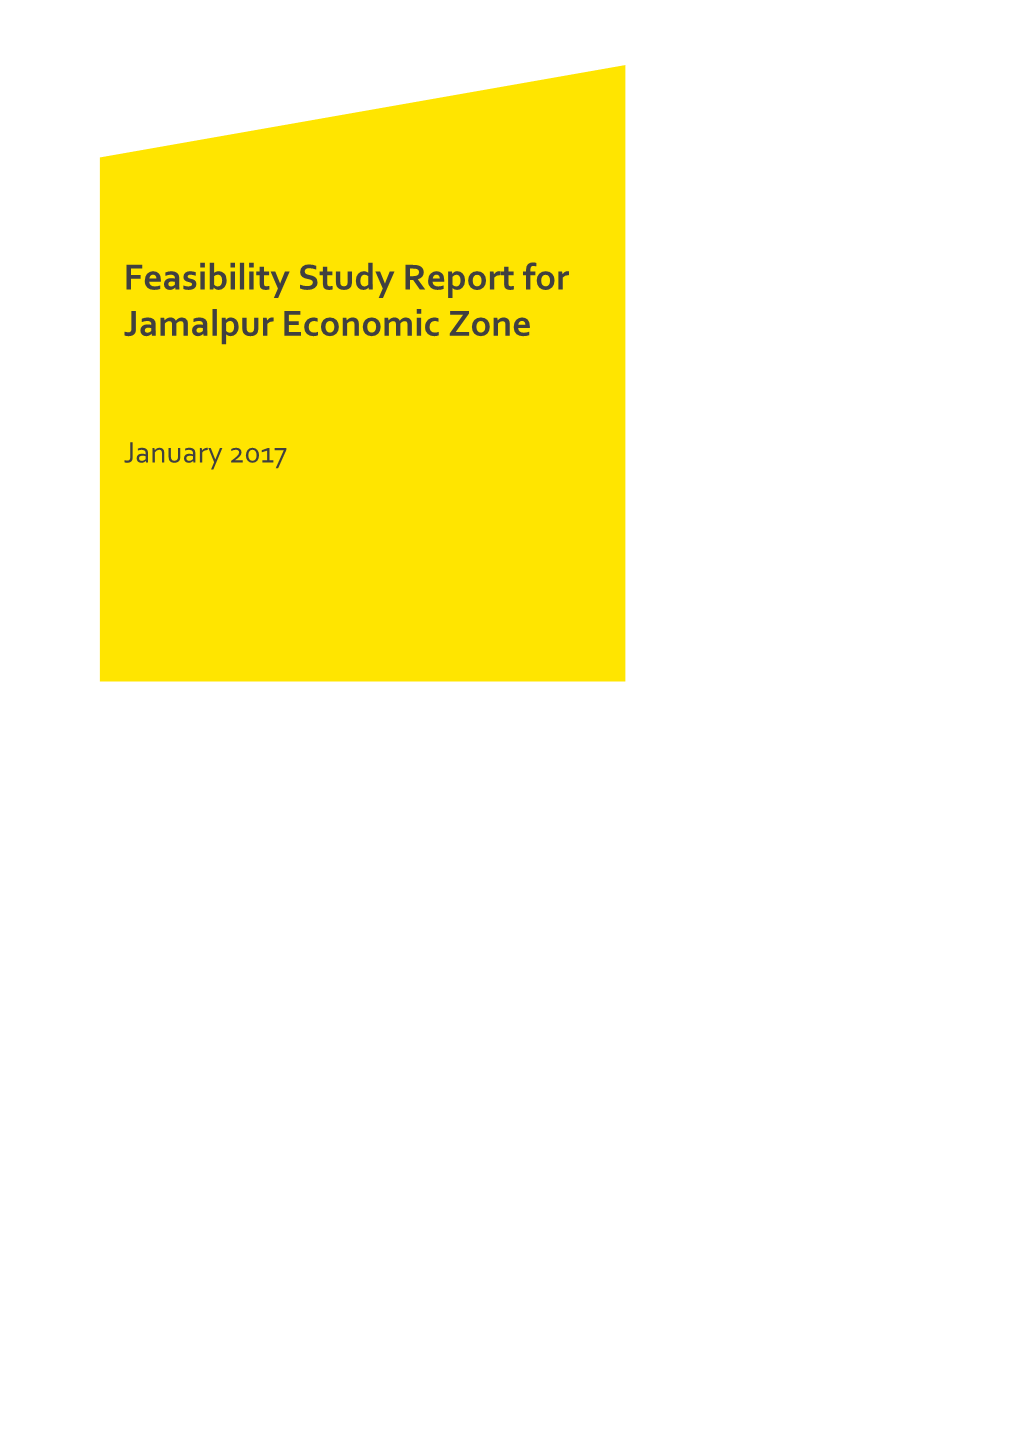 Feasibility Study Report for Jamalpur Economic Zone